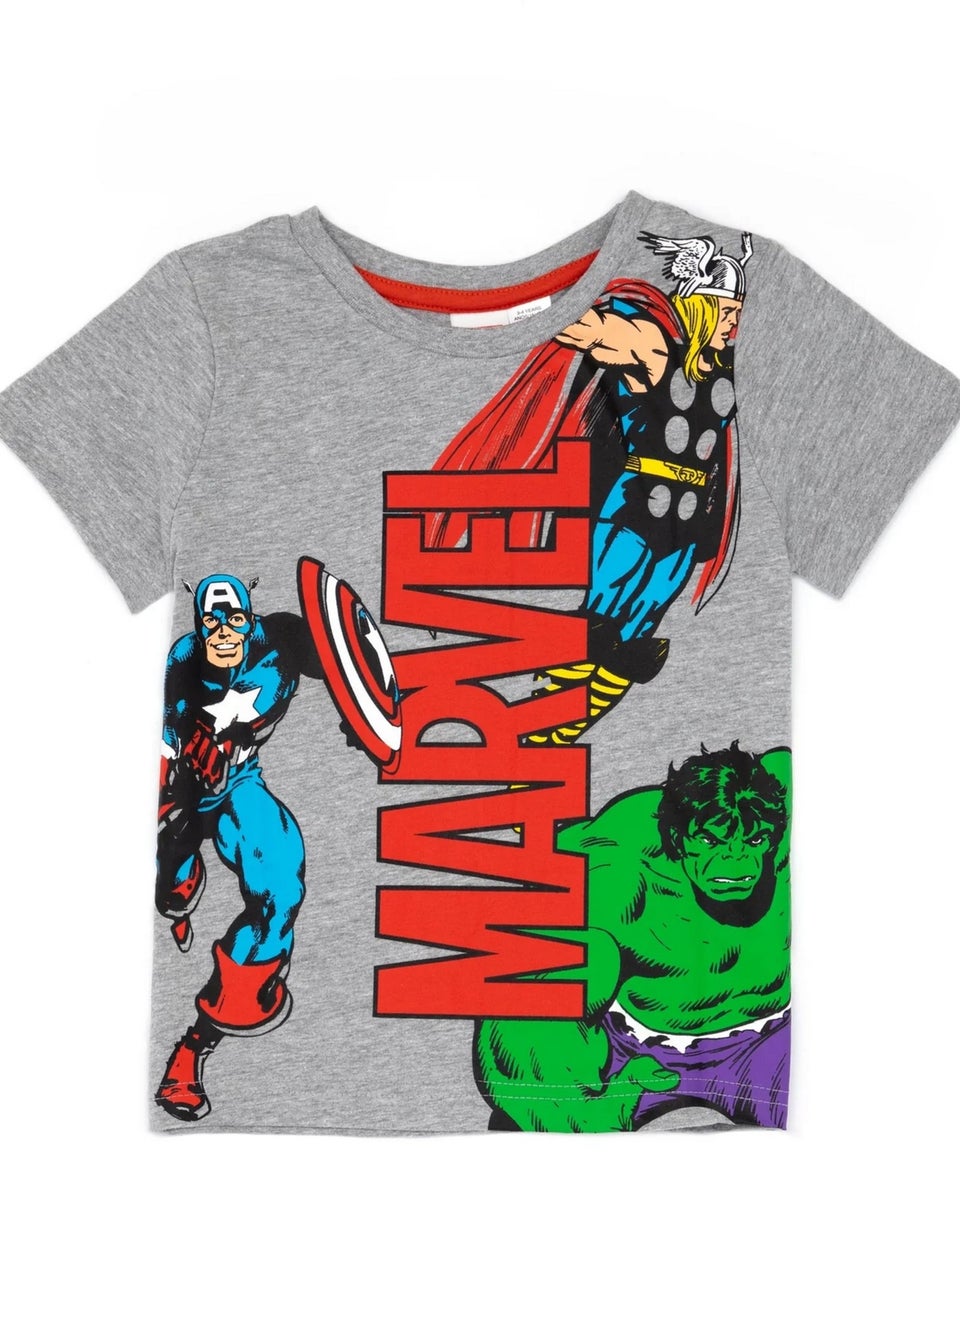 Marvel Boys Black/Grey Superhero Short Pyjama Set (2-8yrs)